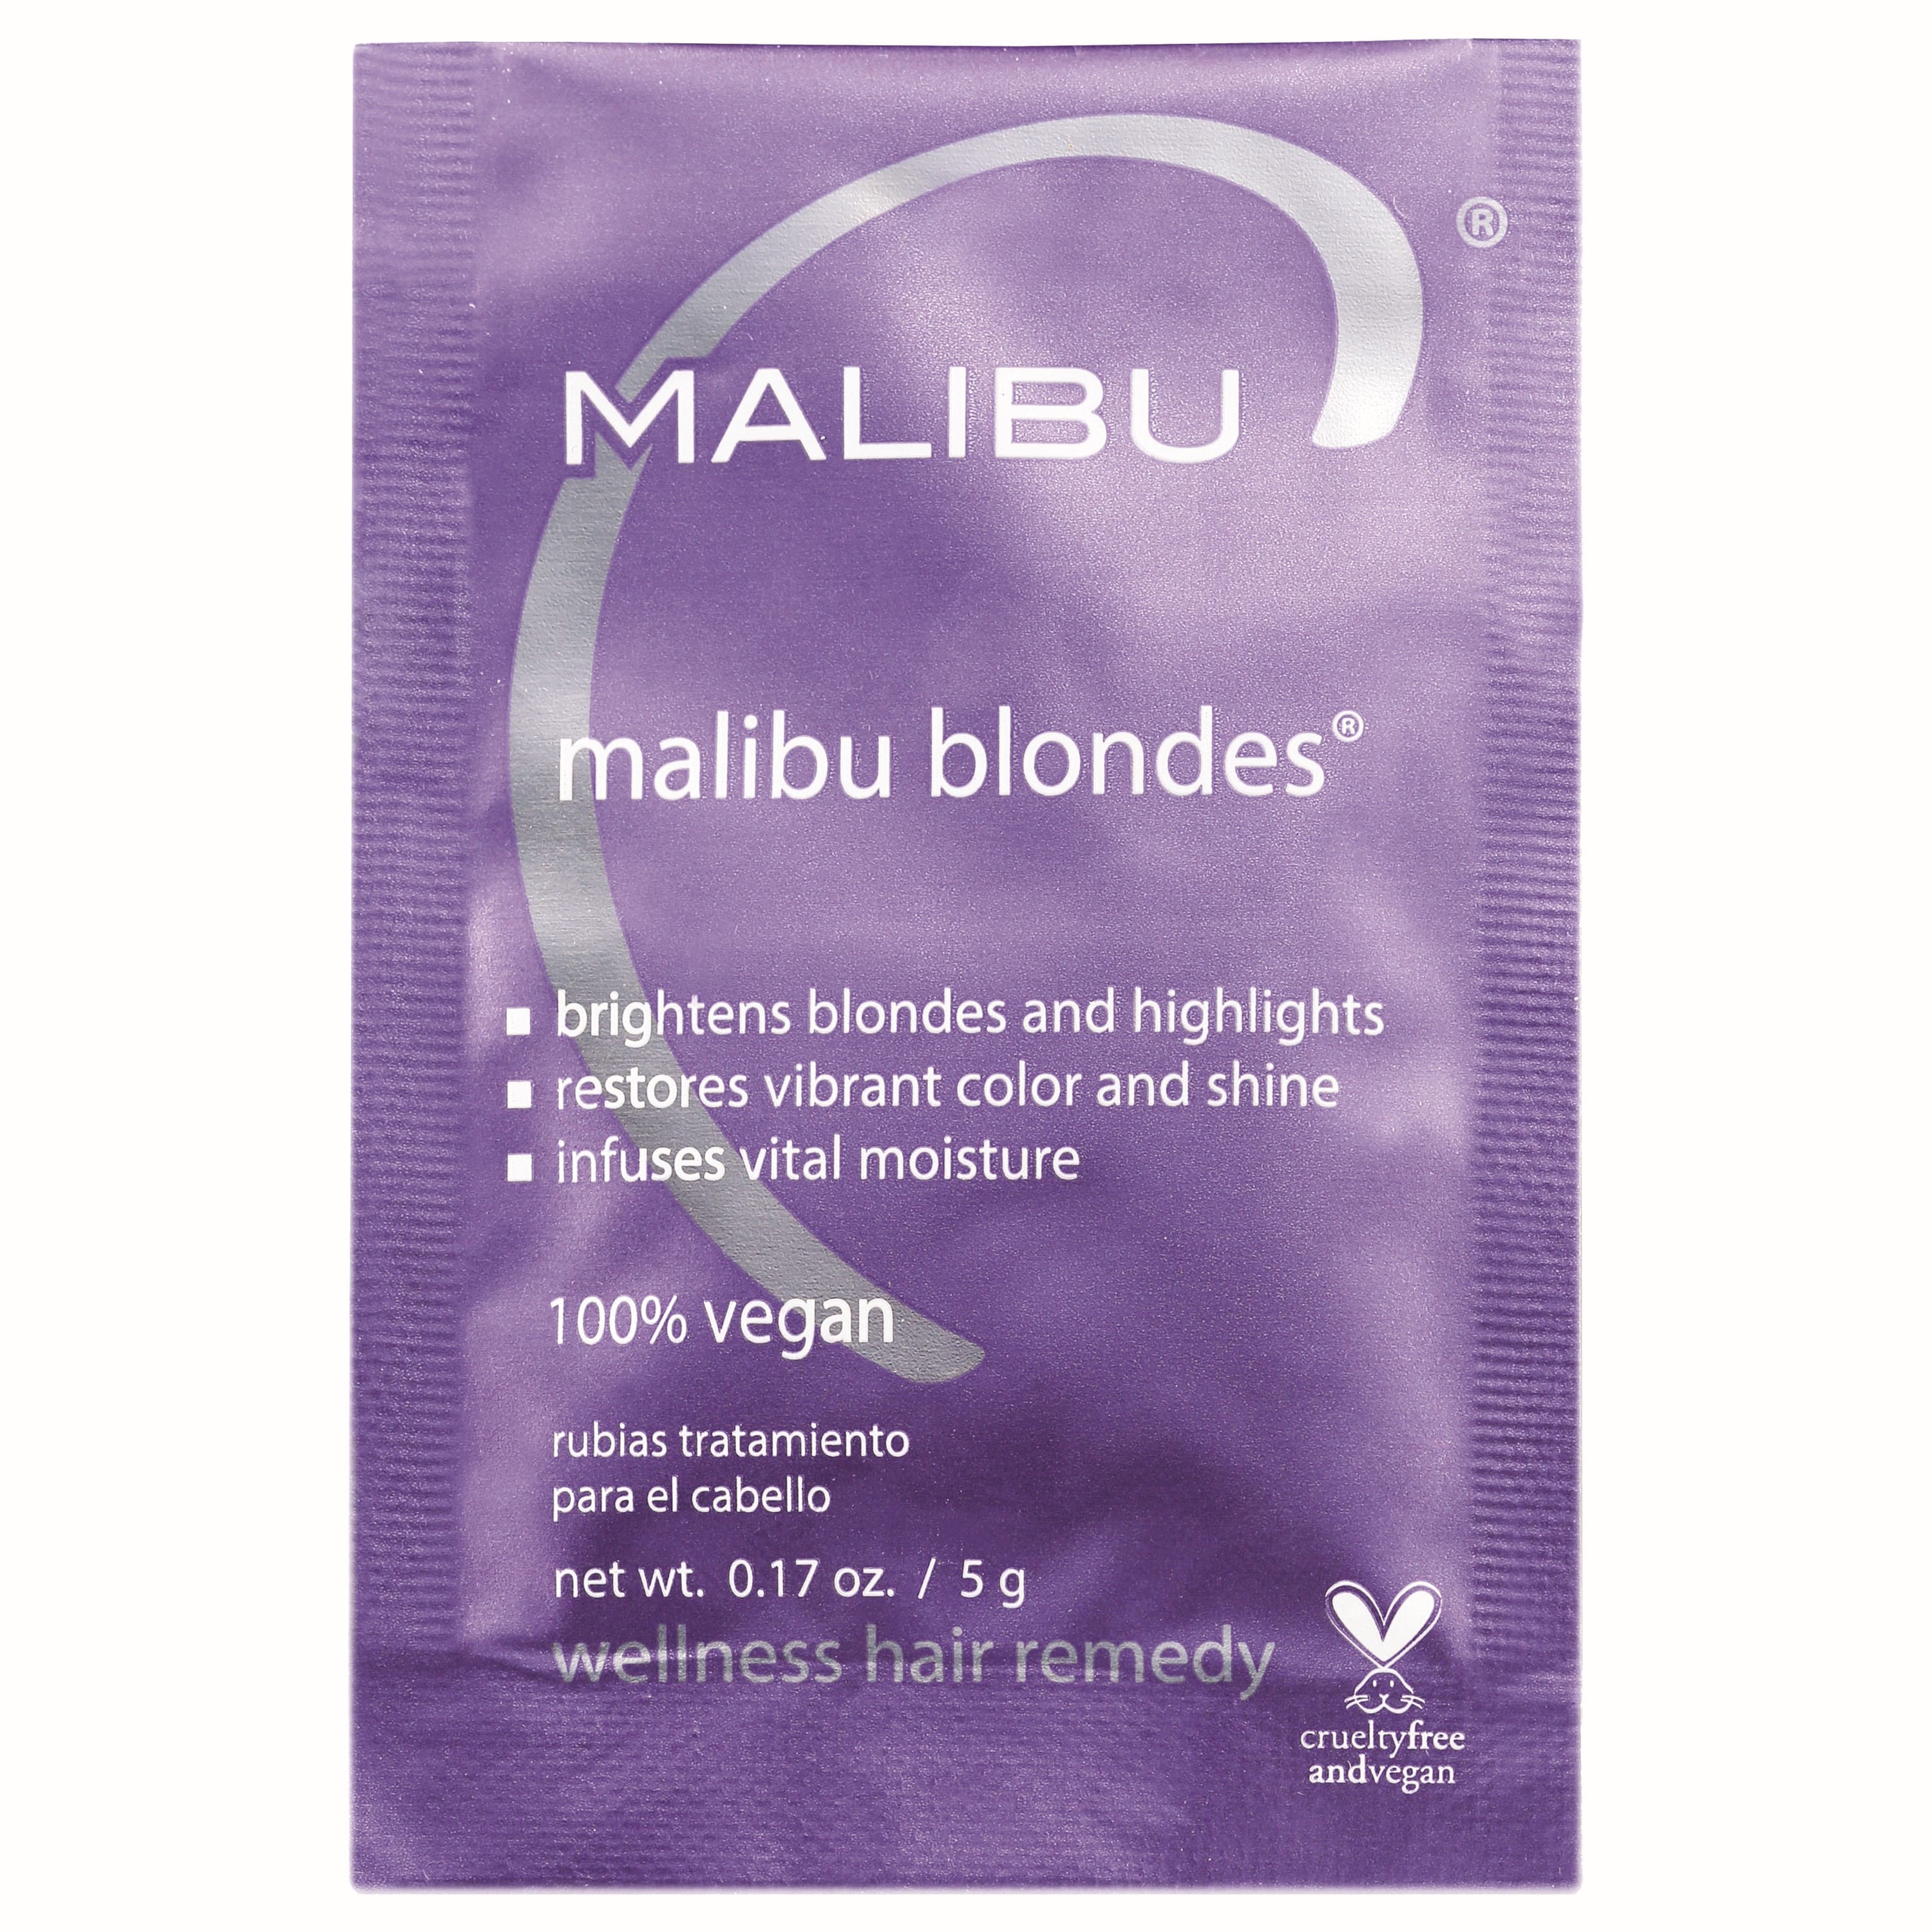 Malibu Hair Care Malibu C Malibu Blondes Wellness Hair Remedy, 1 Packet - 0.17 Oz , CVS